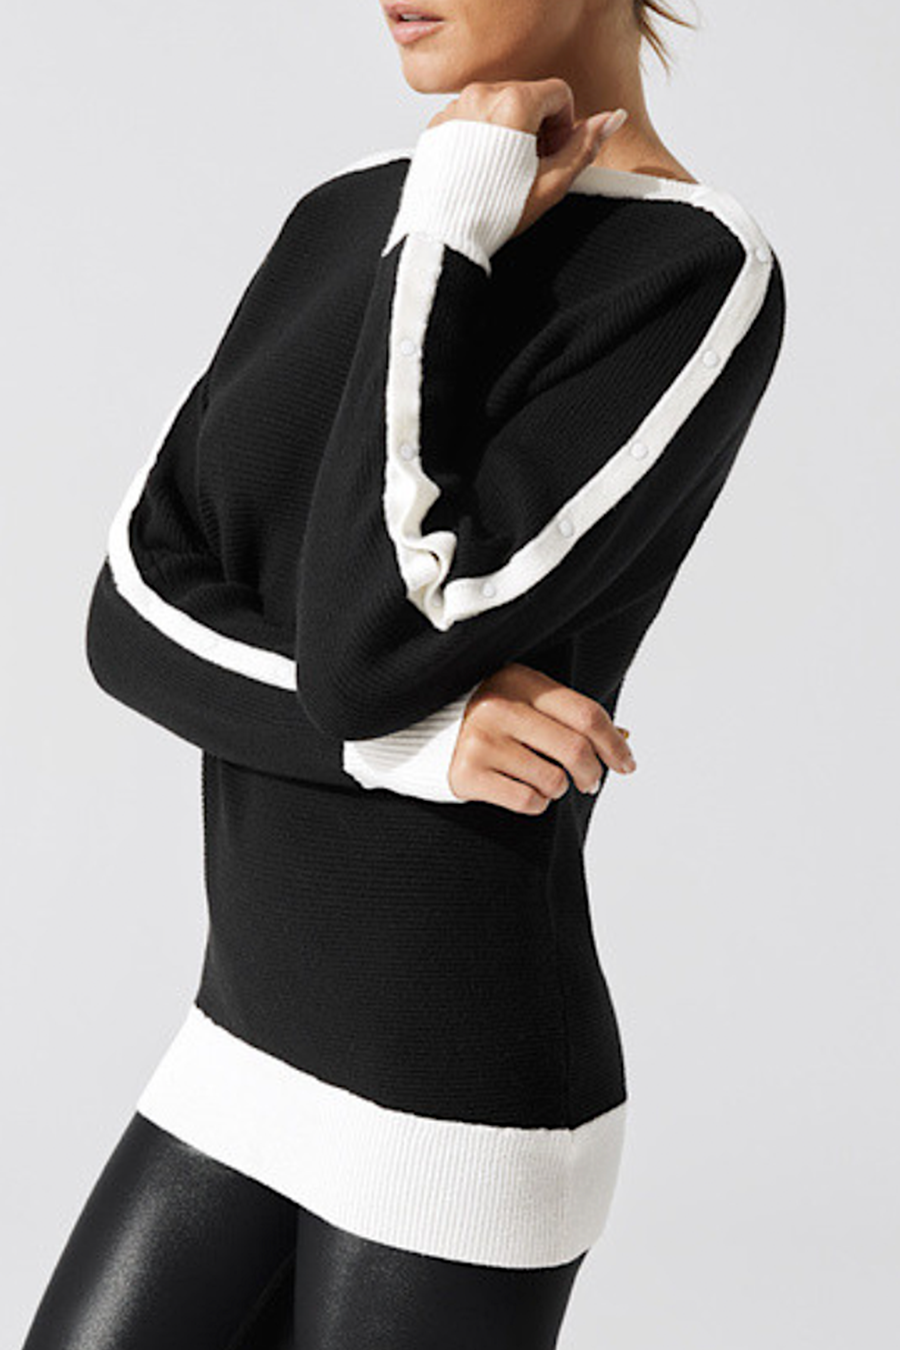 Intercept Sweater | Black/White - Main Image Number 1 of 2